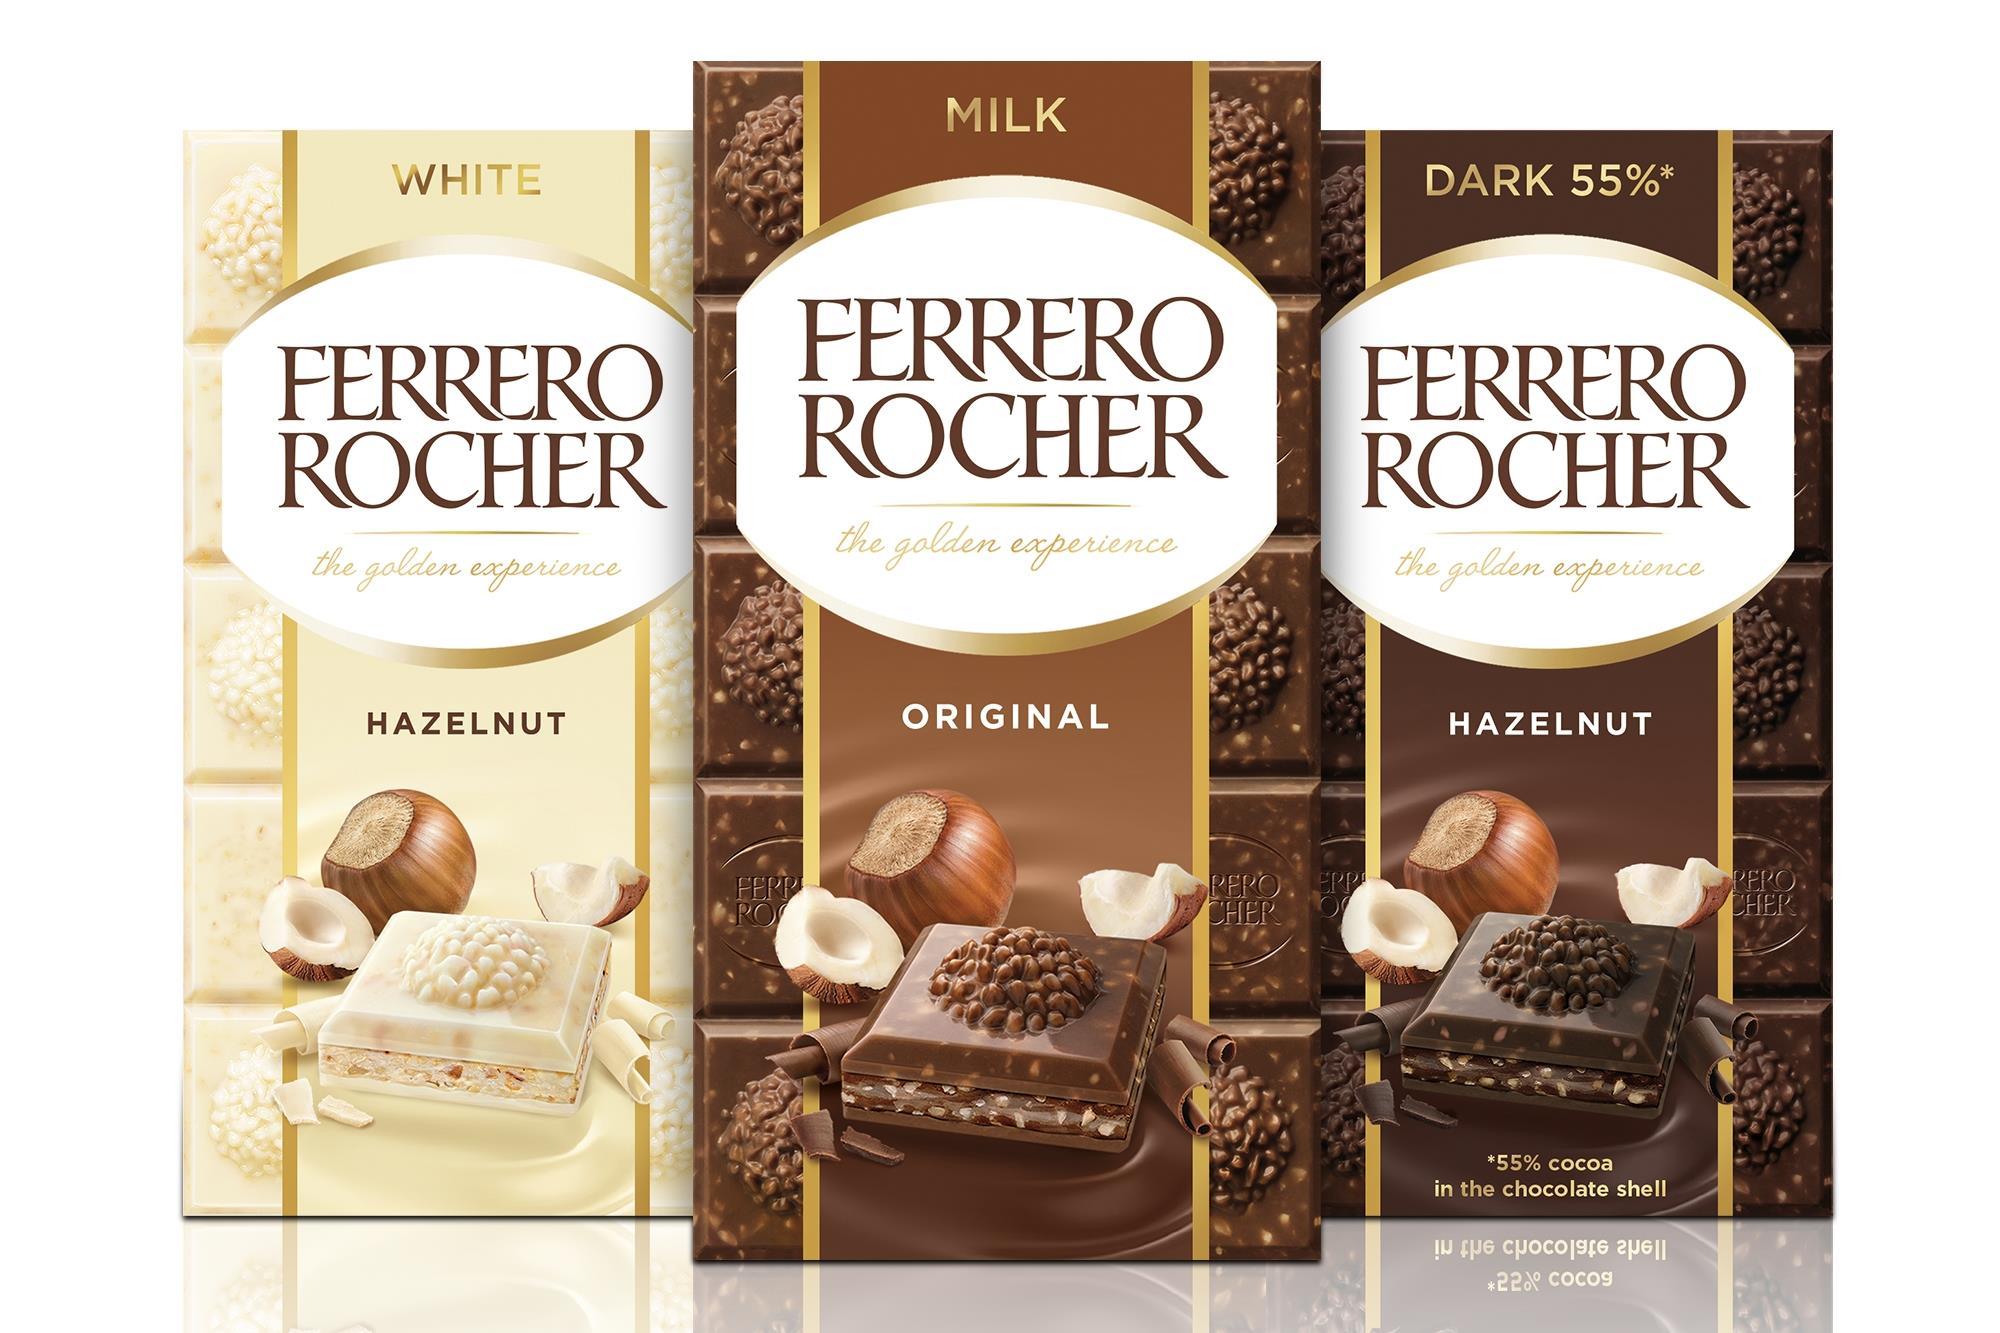 Ferrero makes 'strong progress' towards sustainability targets